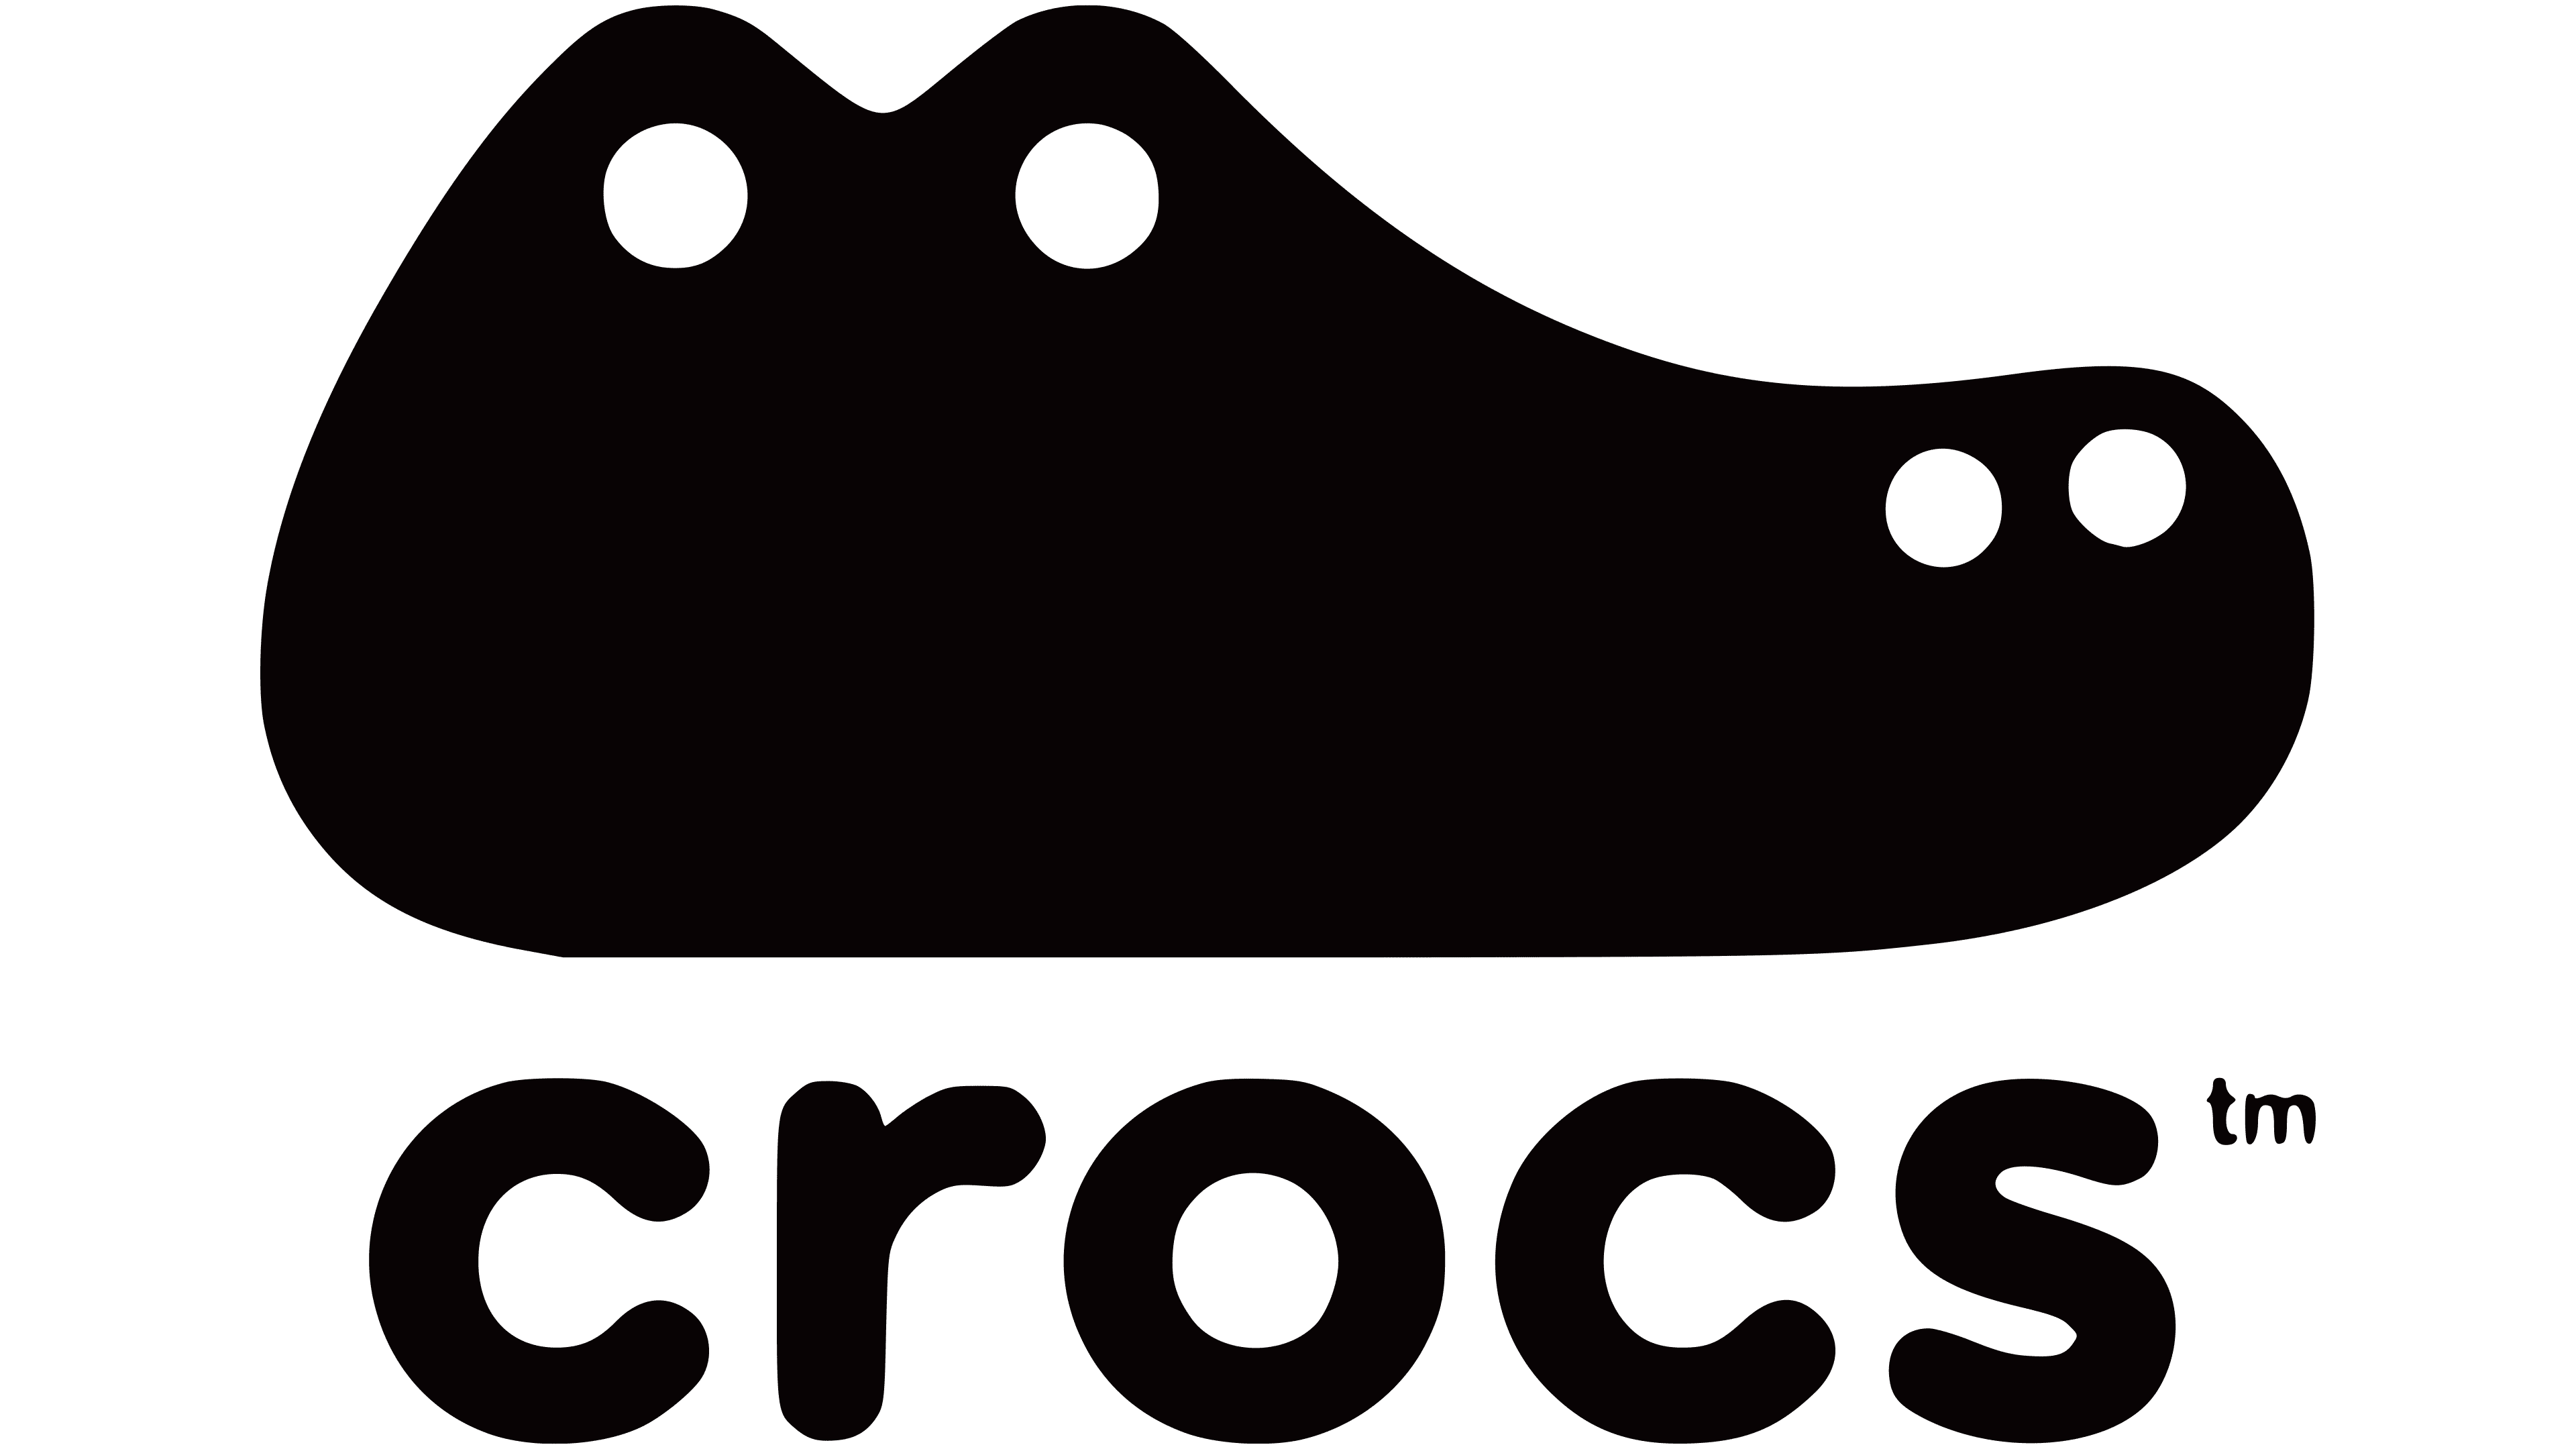 Crocks